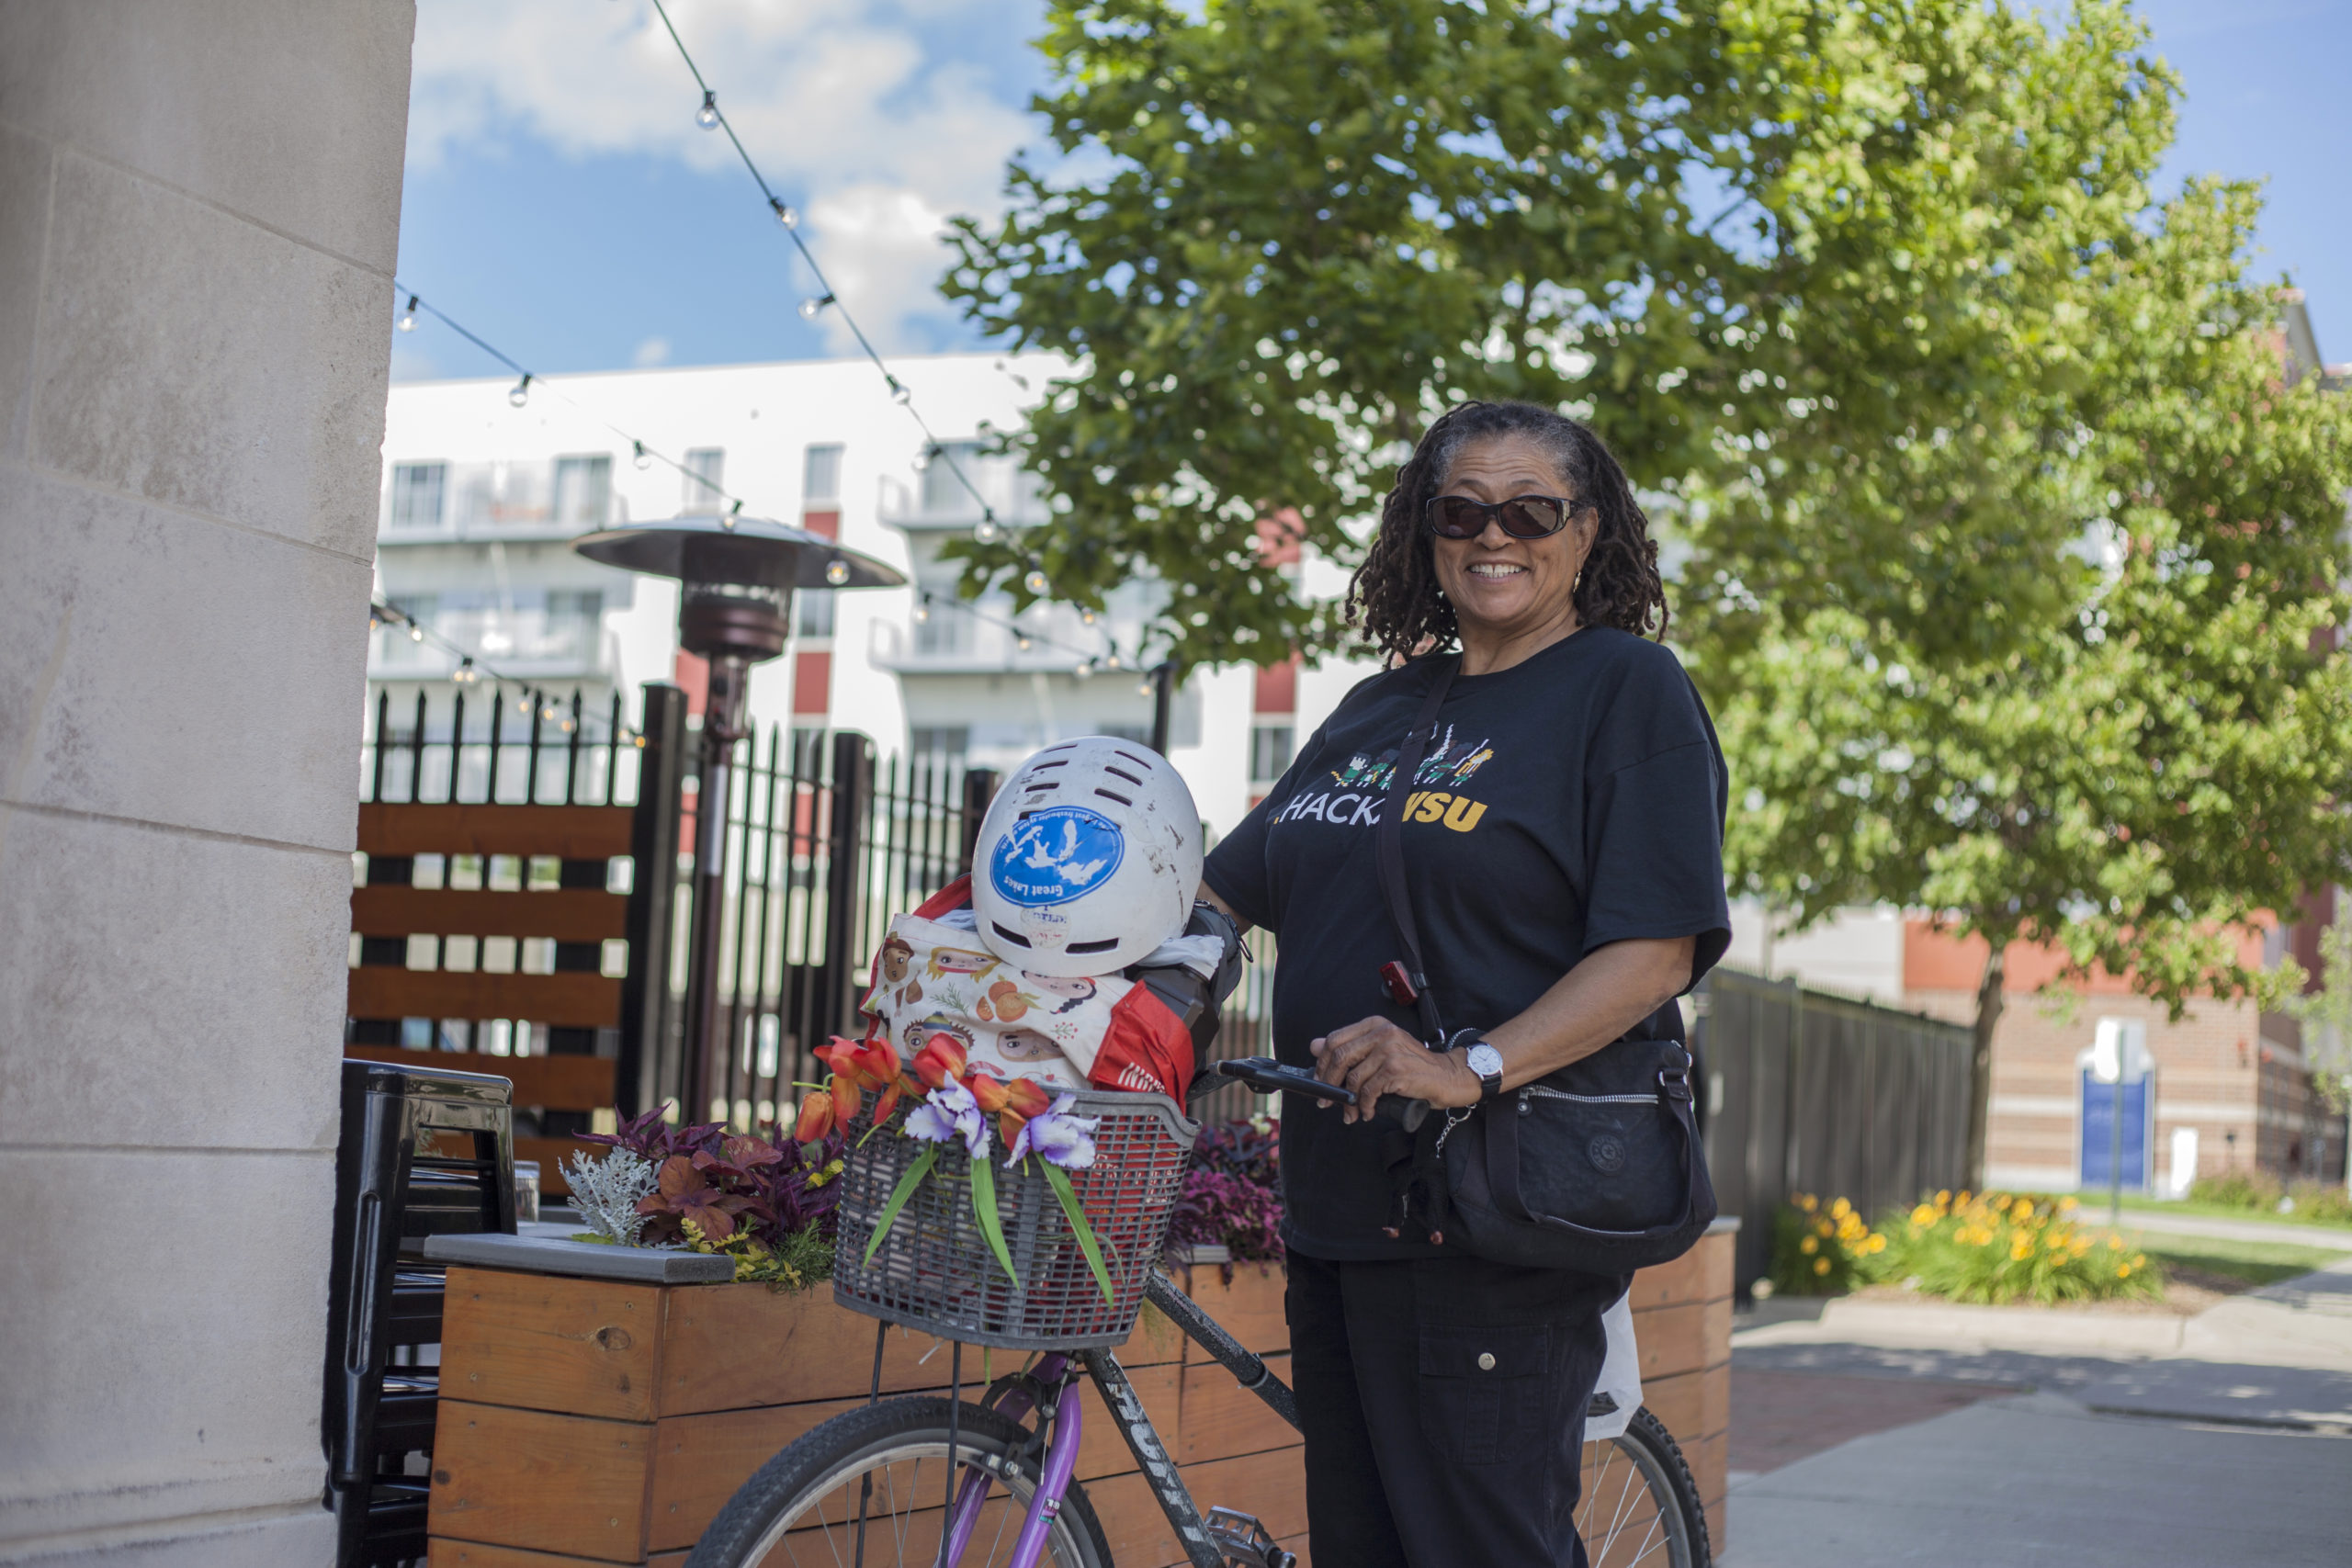 Detroit resident riding her bike through the city